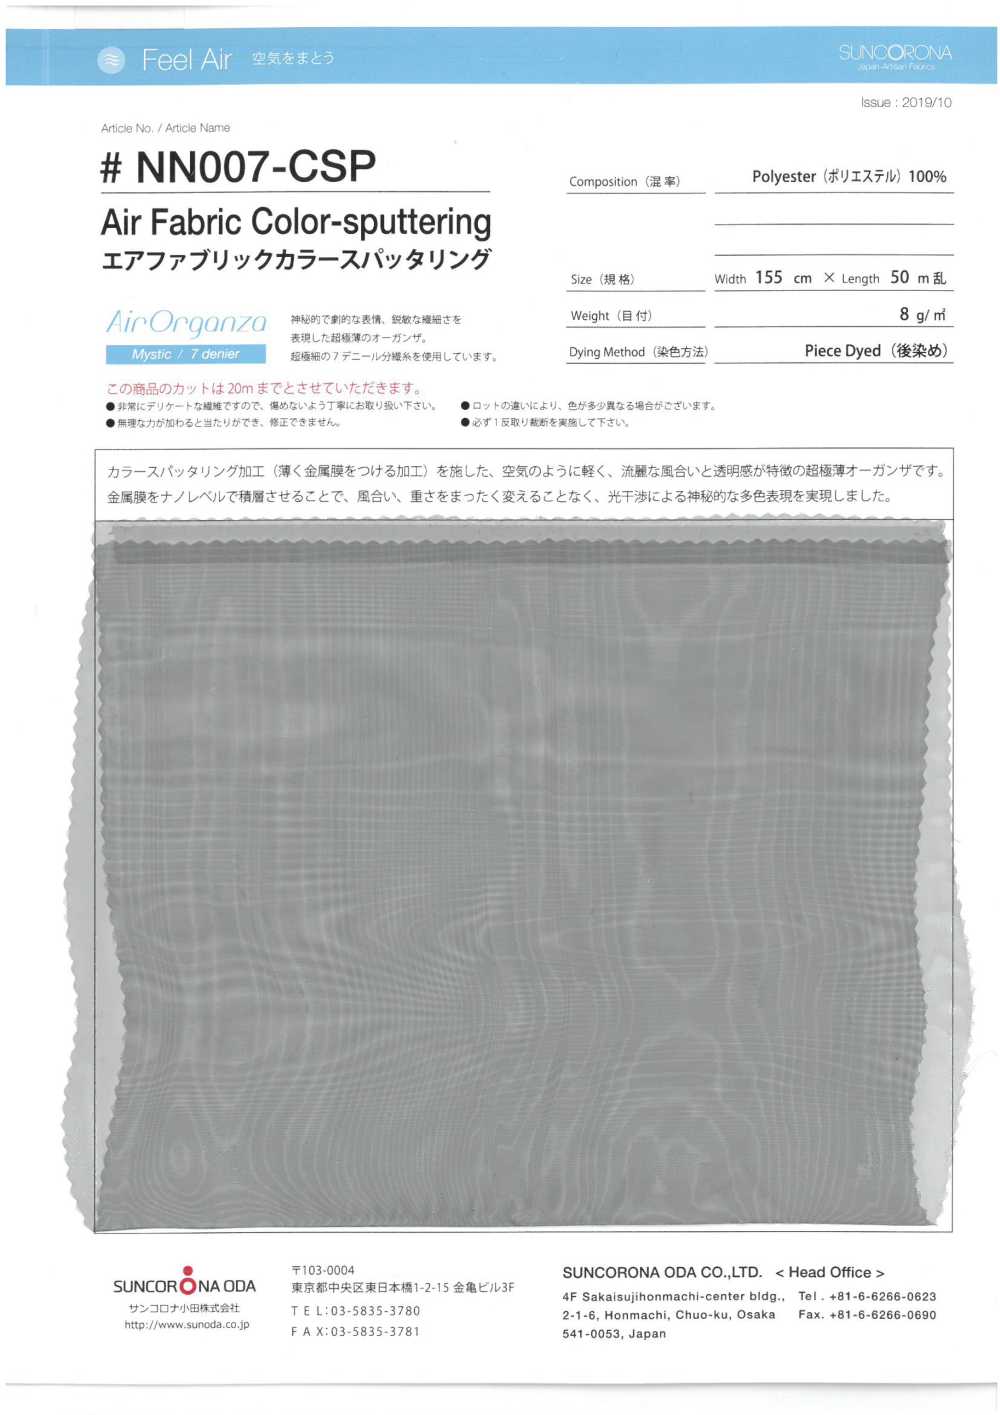 NN007-CSP Air Fabric Color Sputtering[Textilgewebe] Suncorona Oda